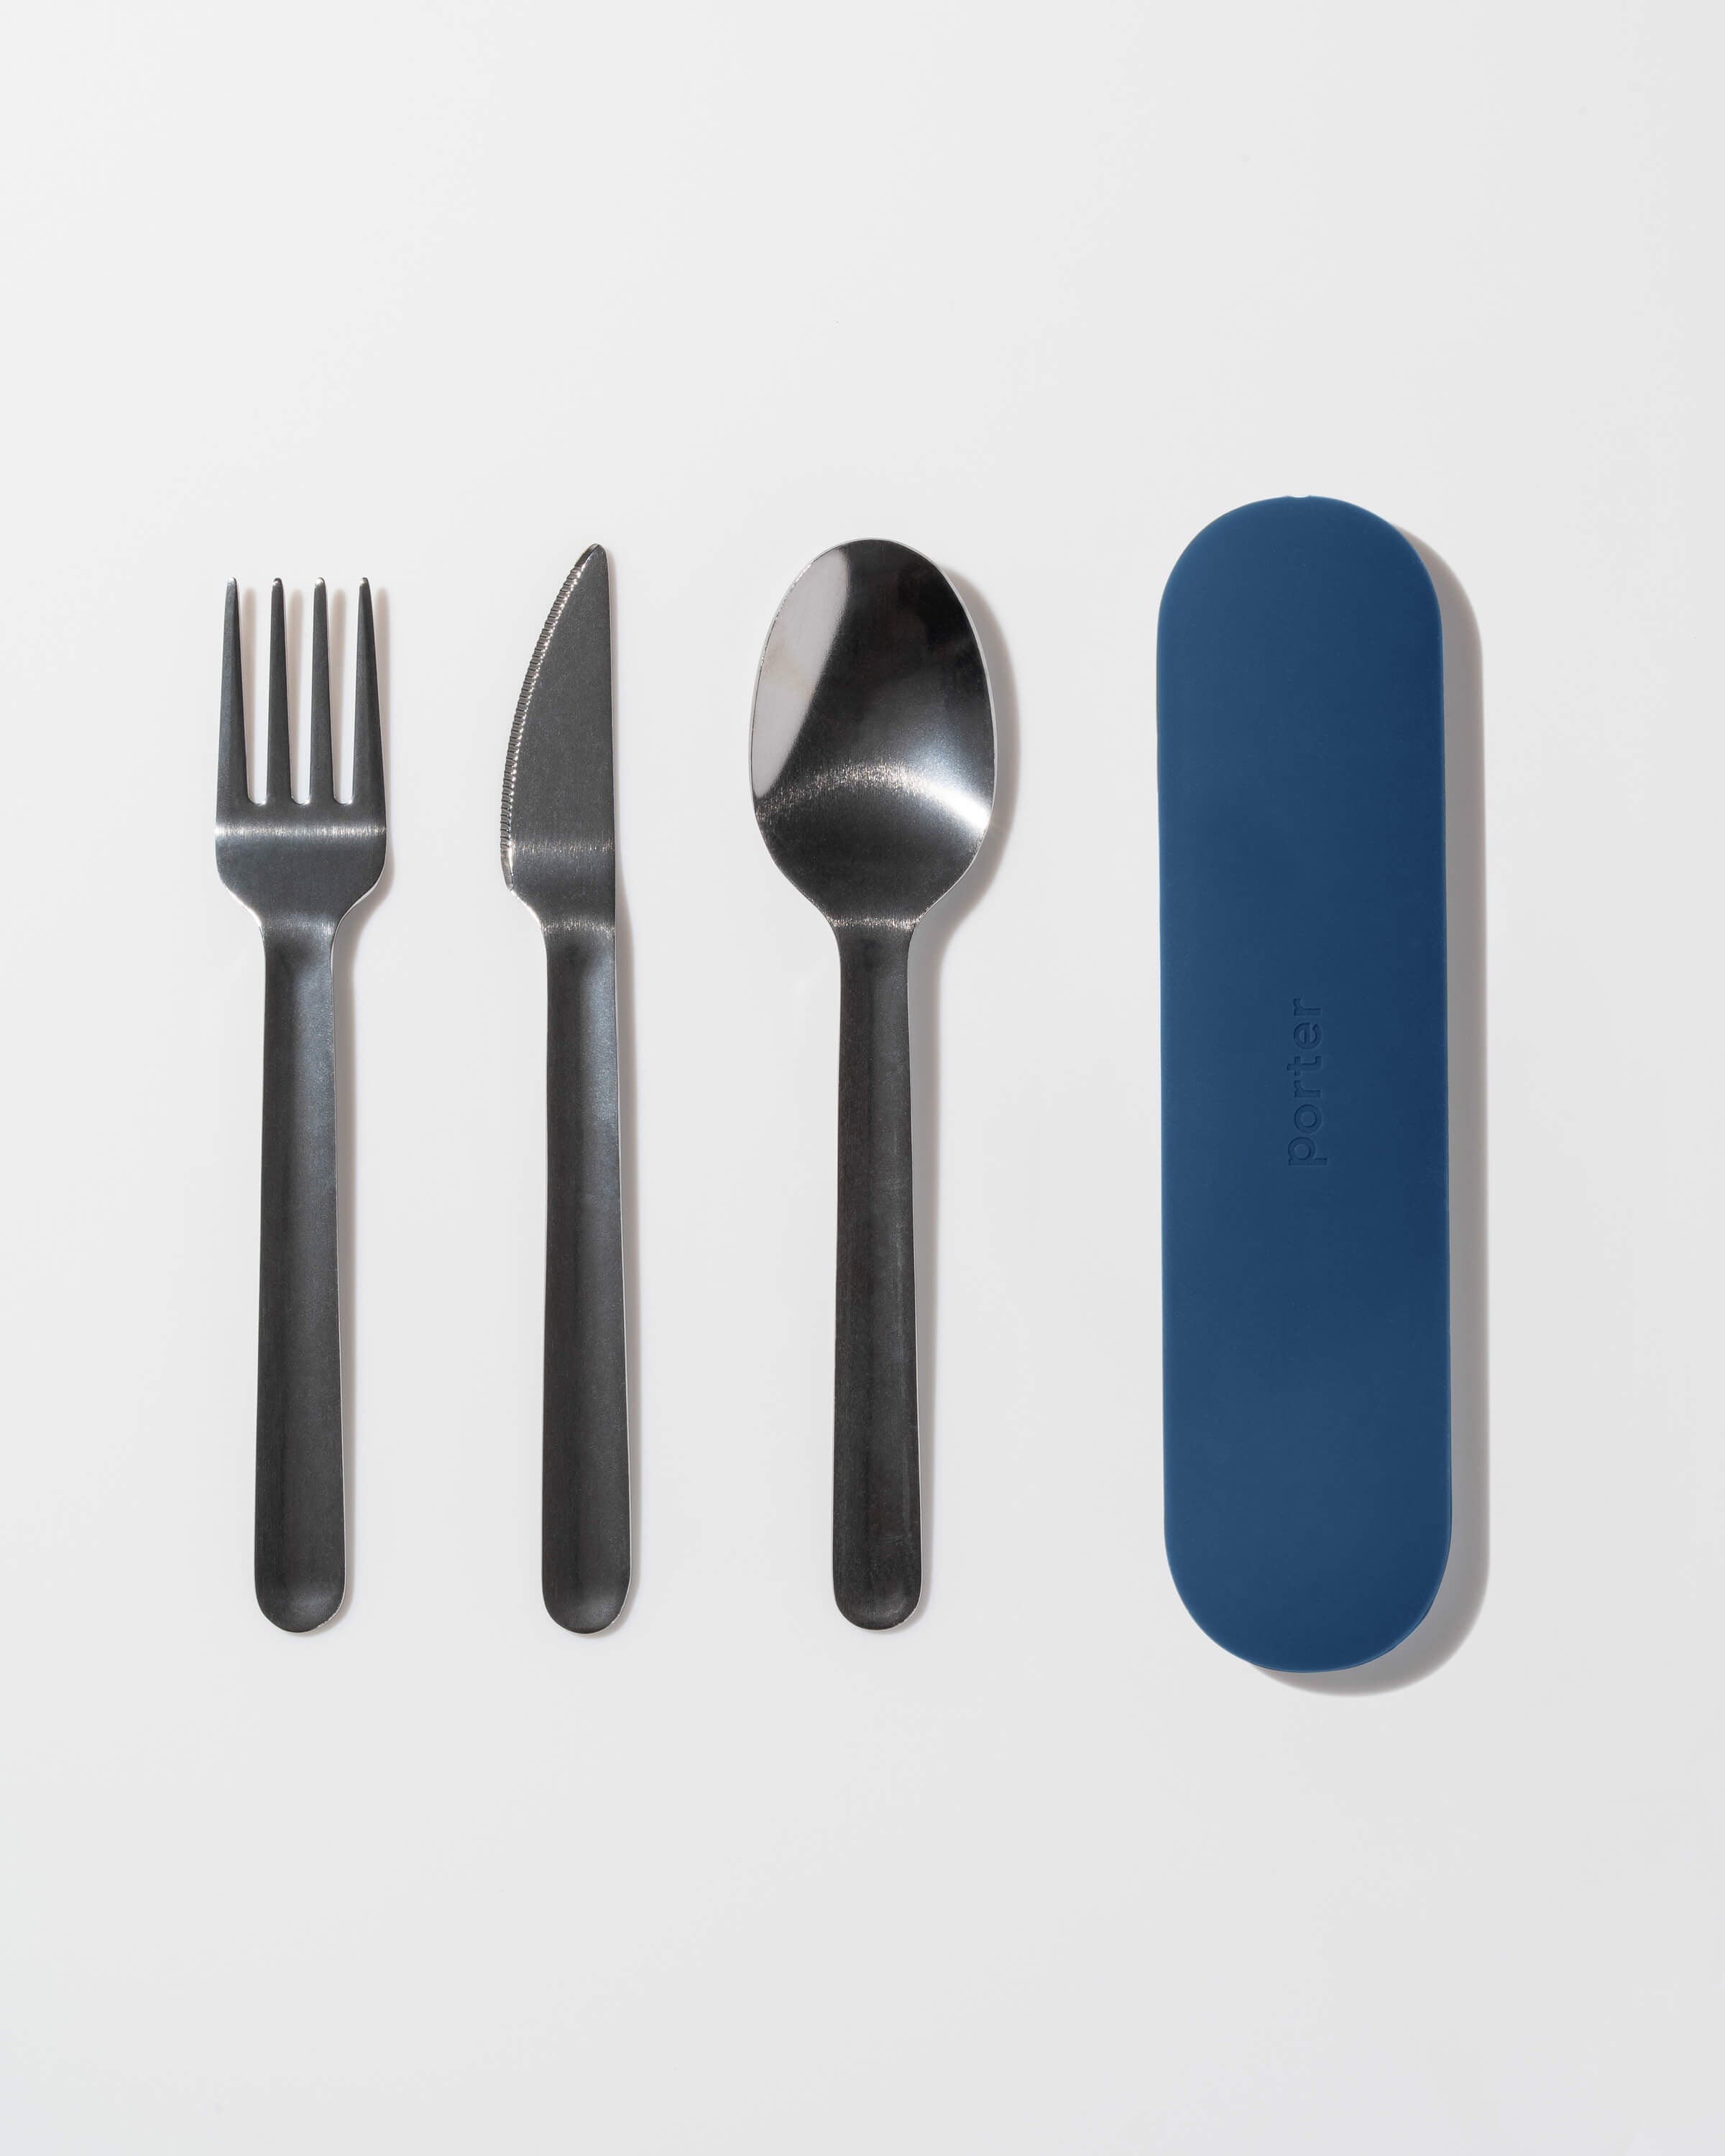 Utensil set - 2 spoon /2 fork/ travel pouch - PINK - The Fancy